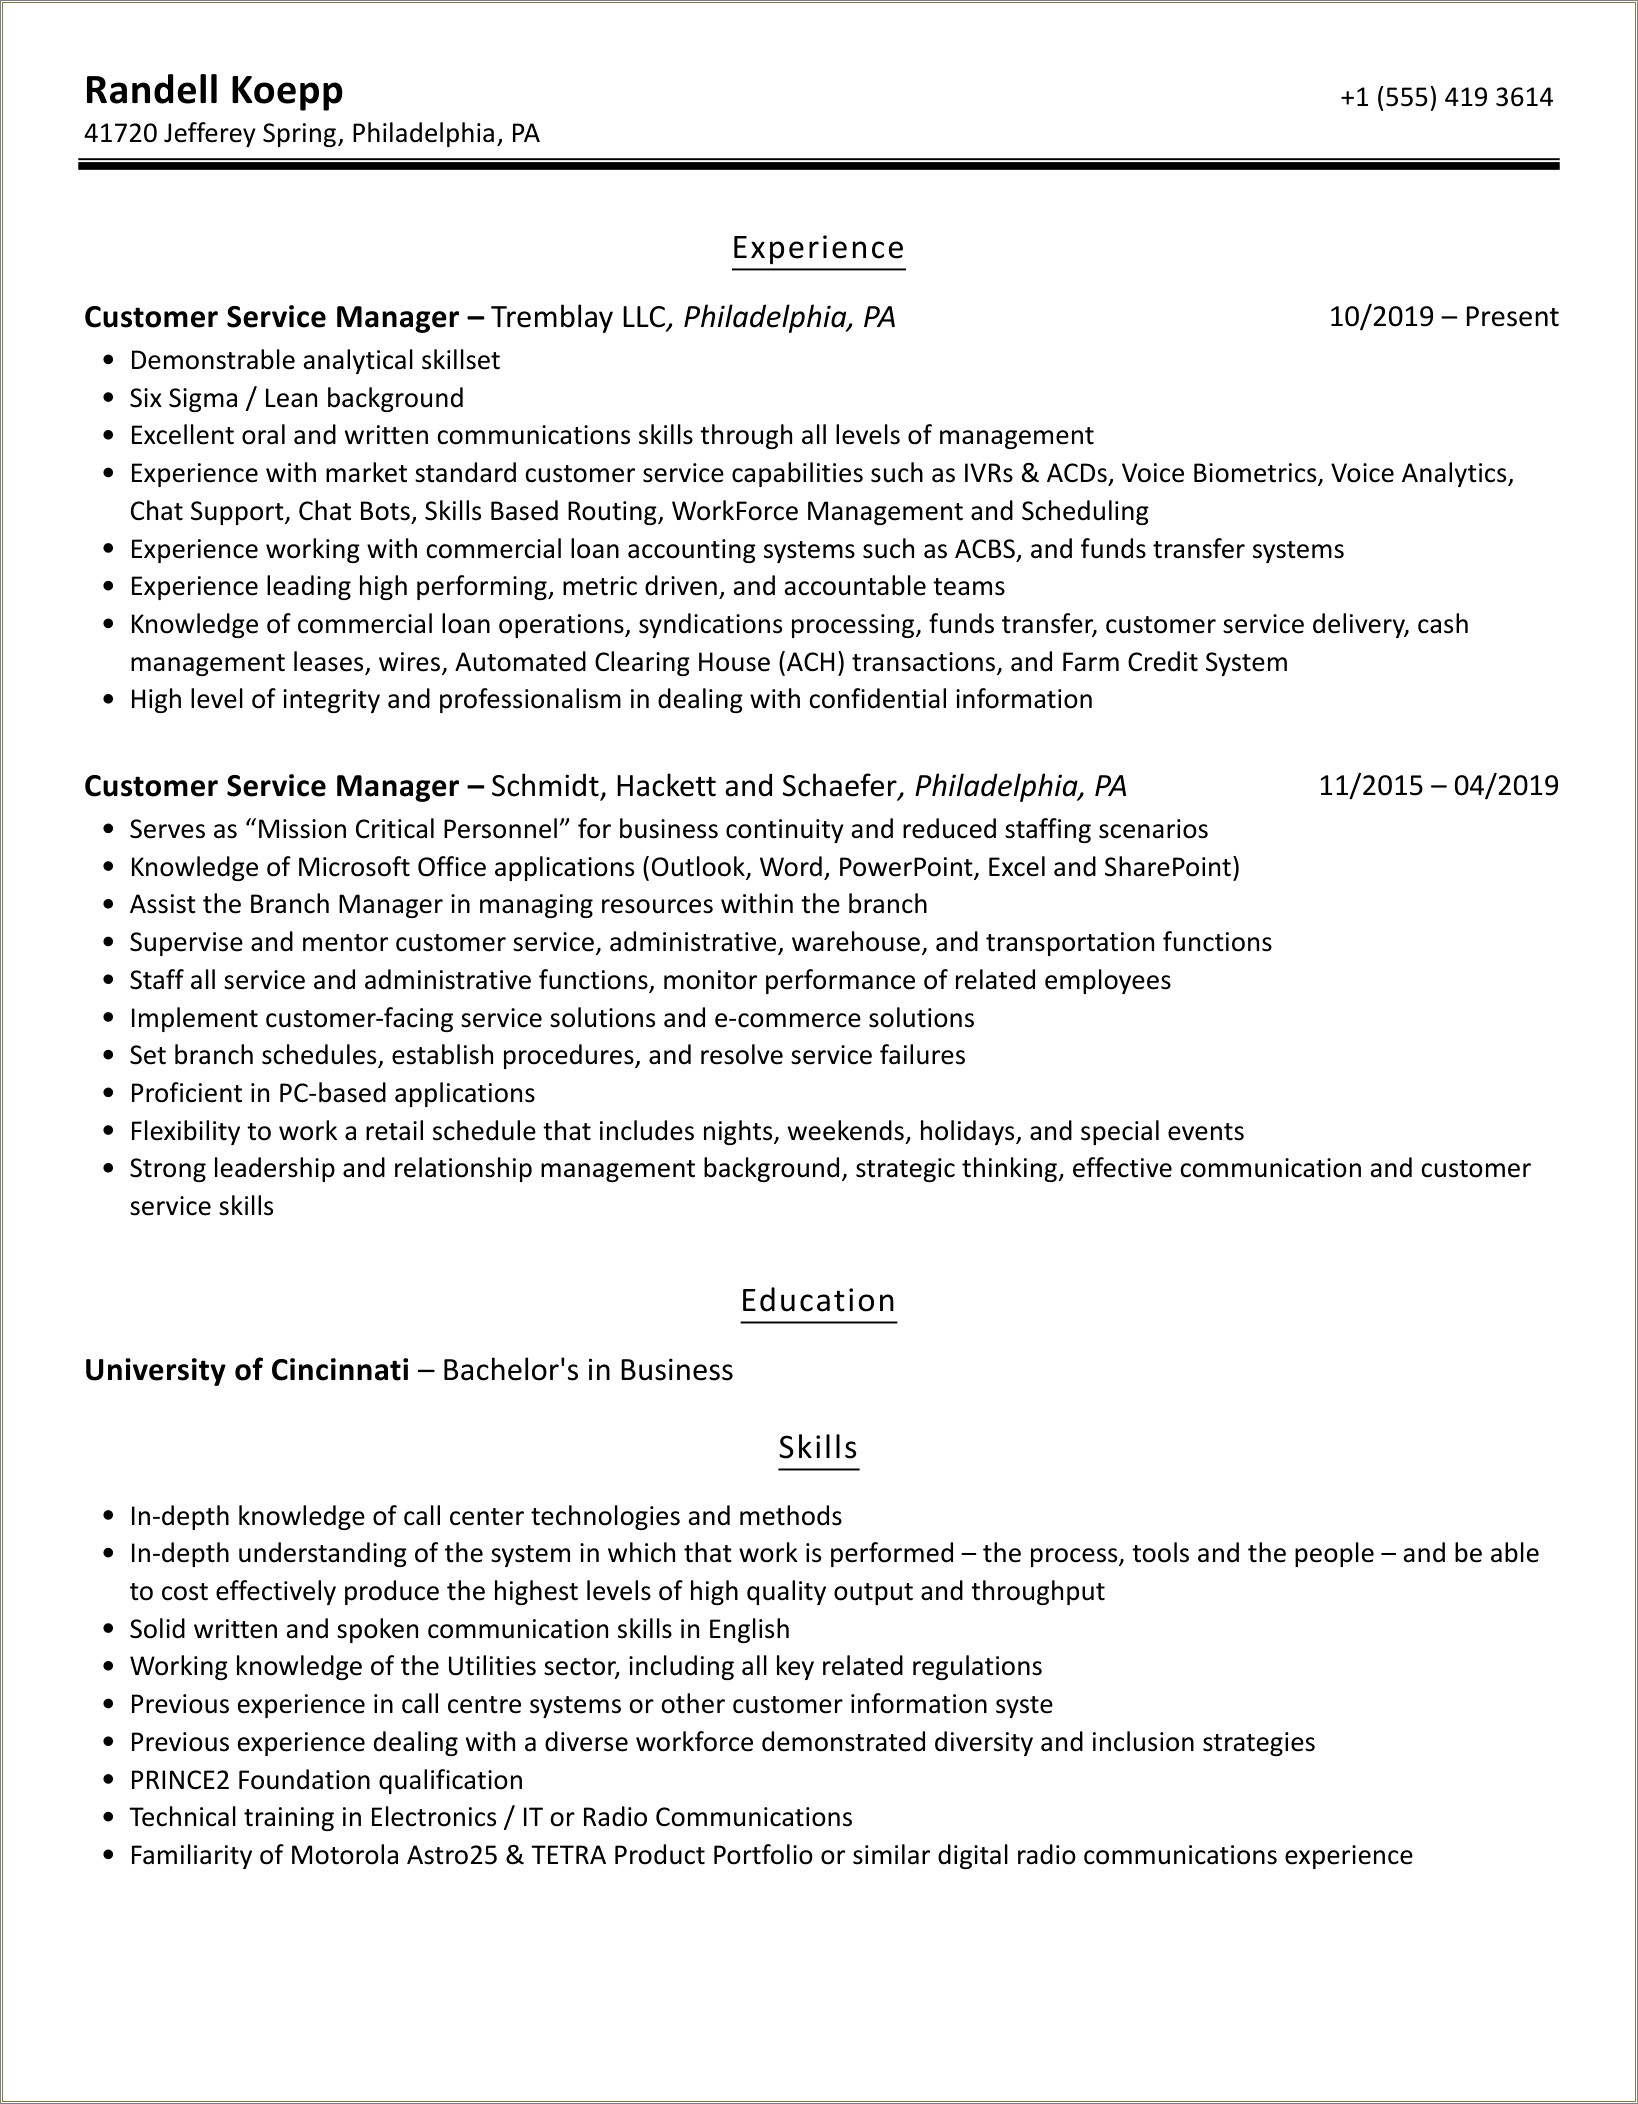 walmart customer service resume description